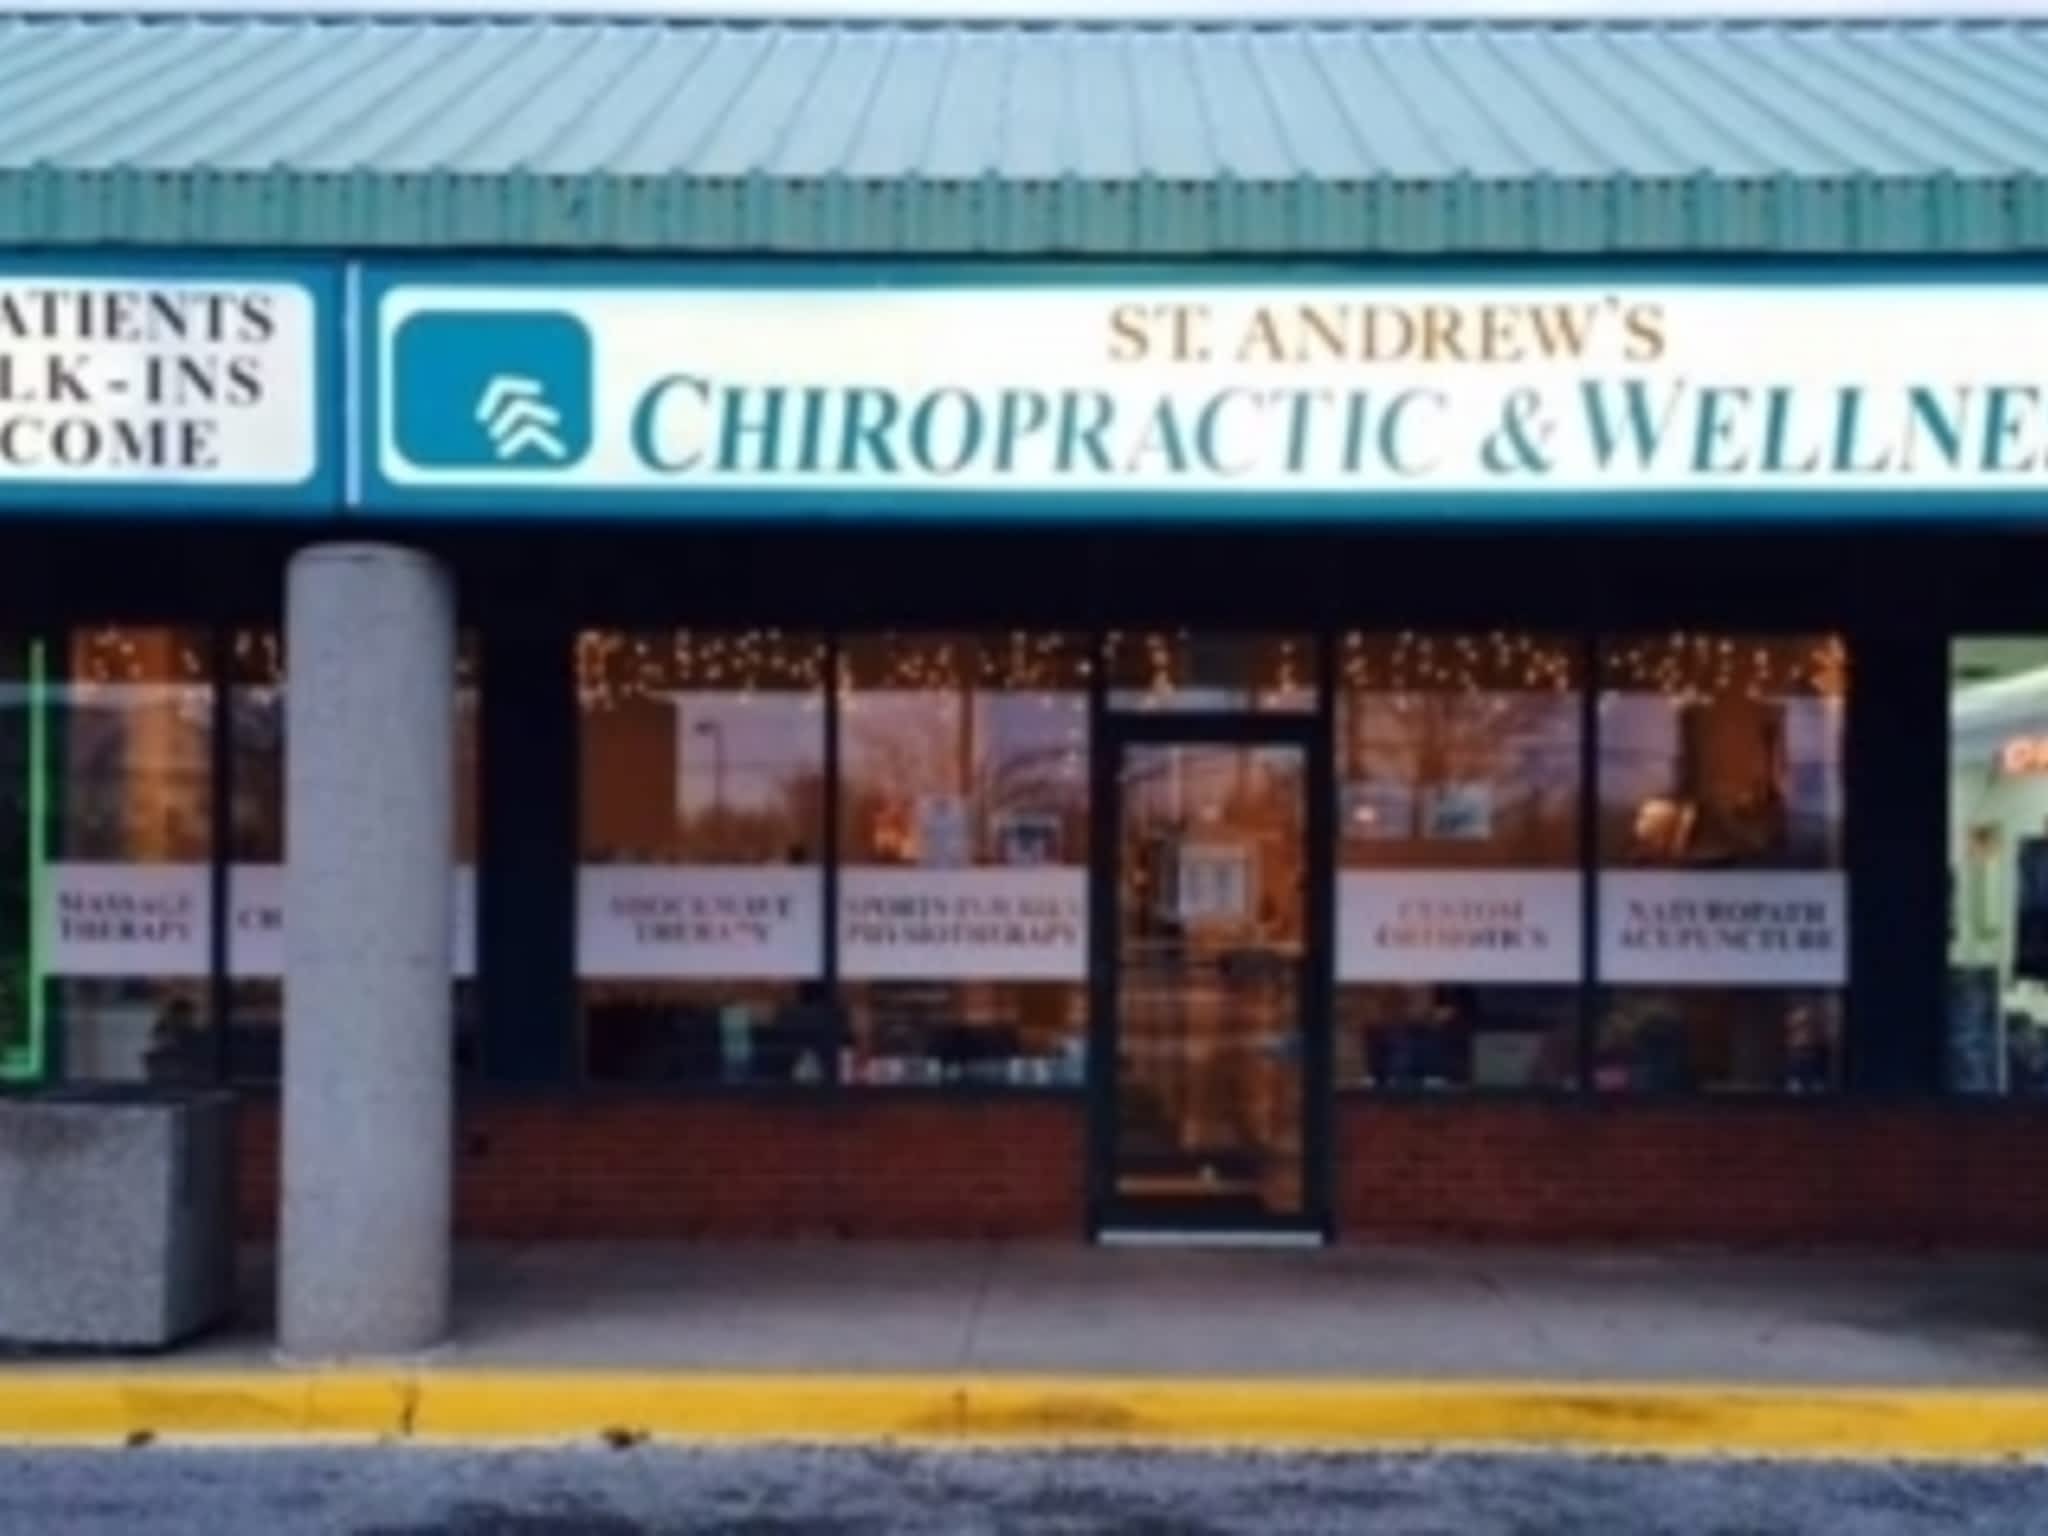 photo St Andrew's Chiropractic & Wellness